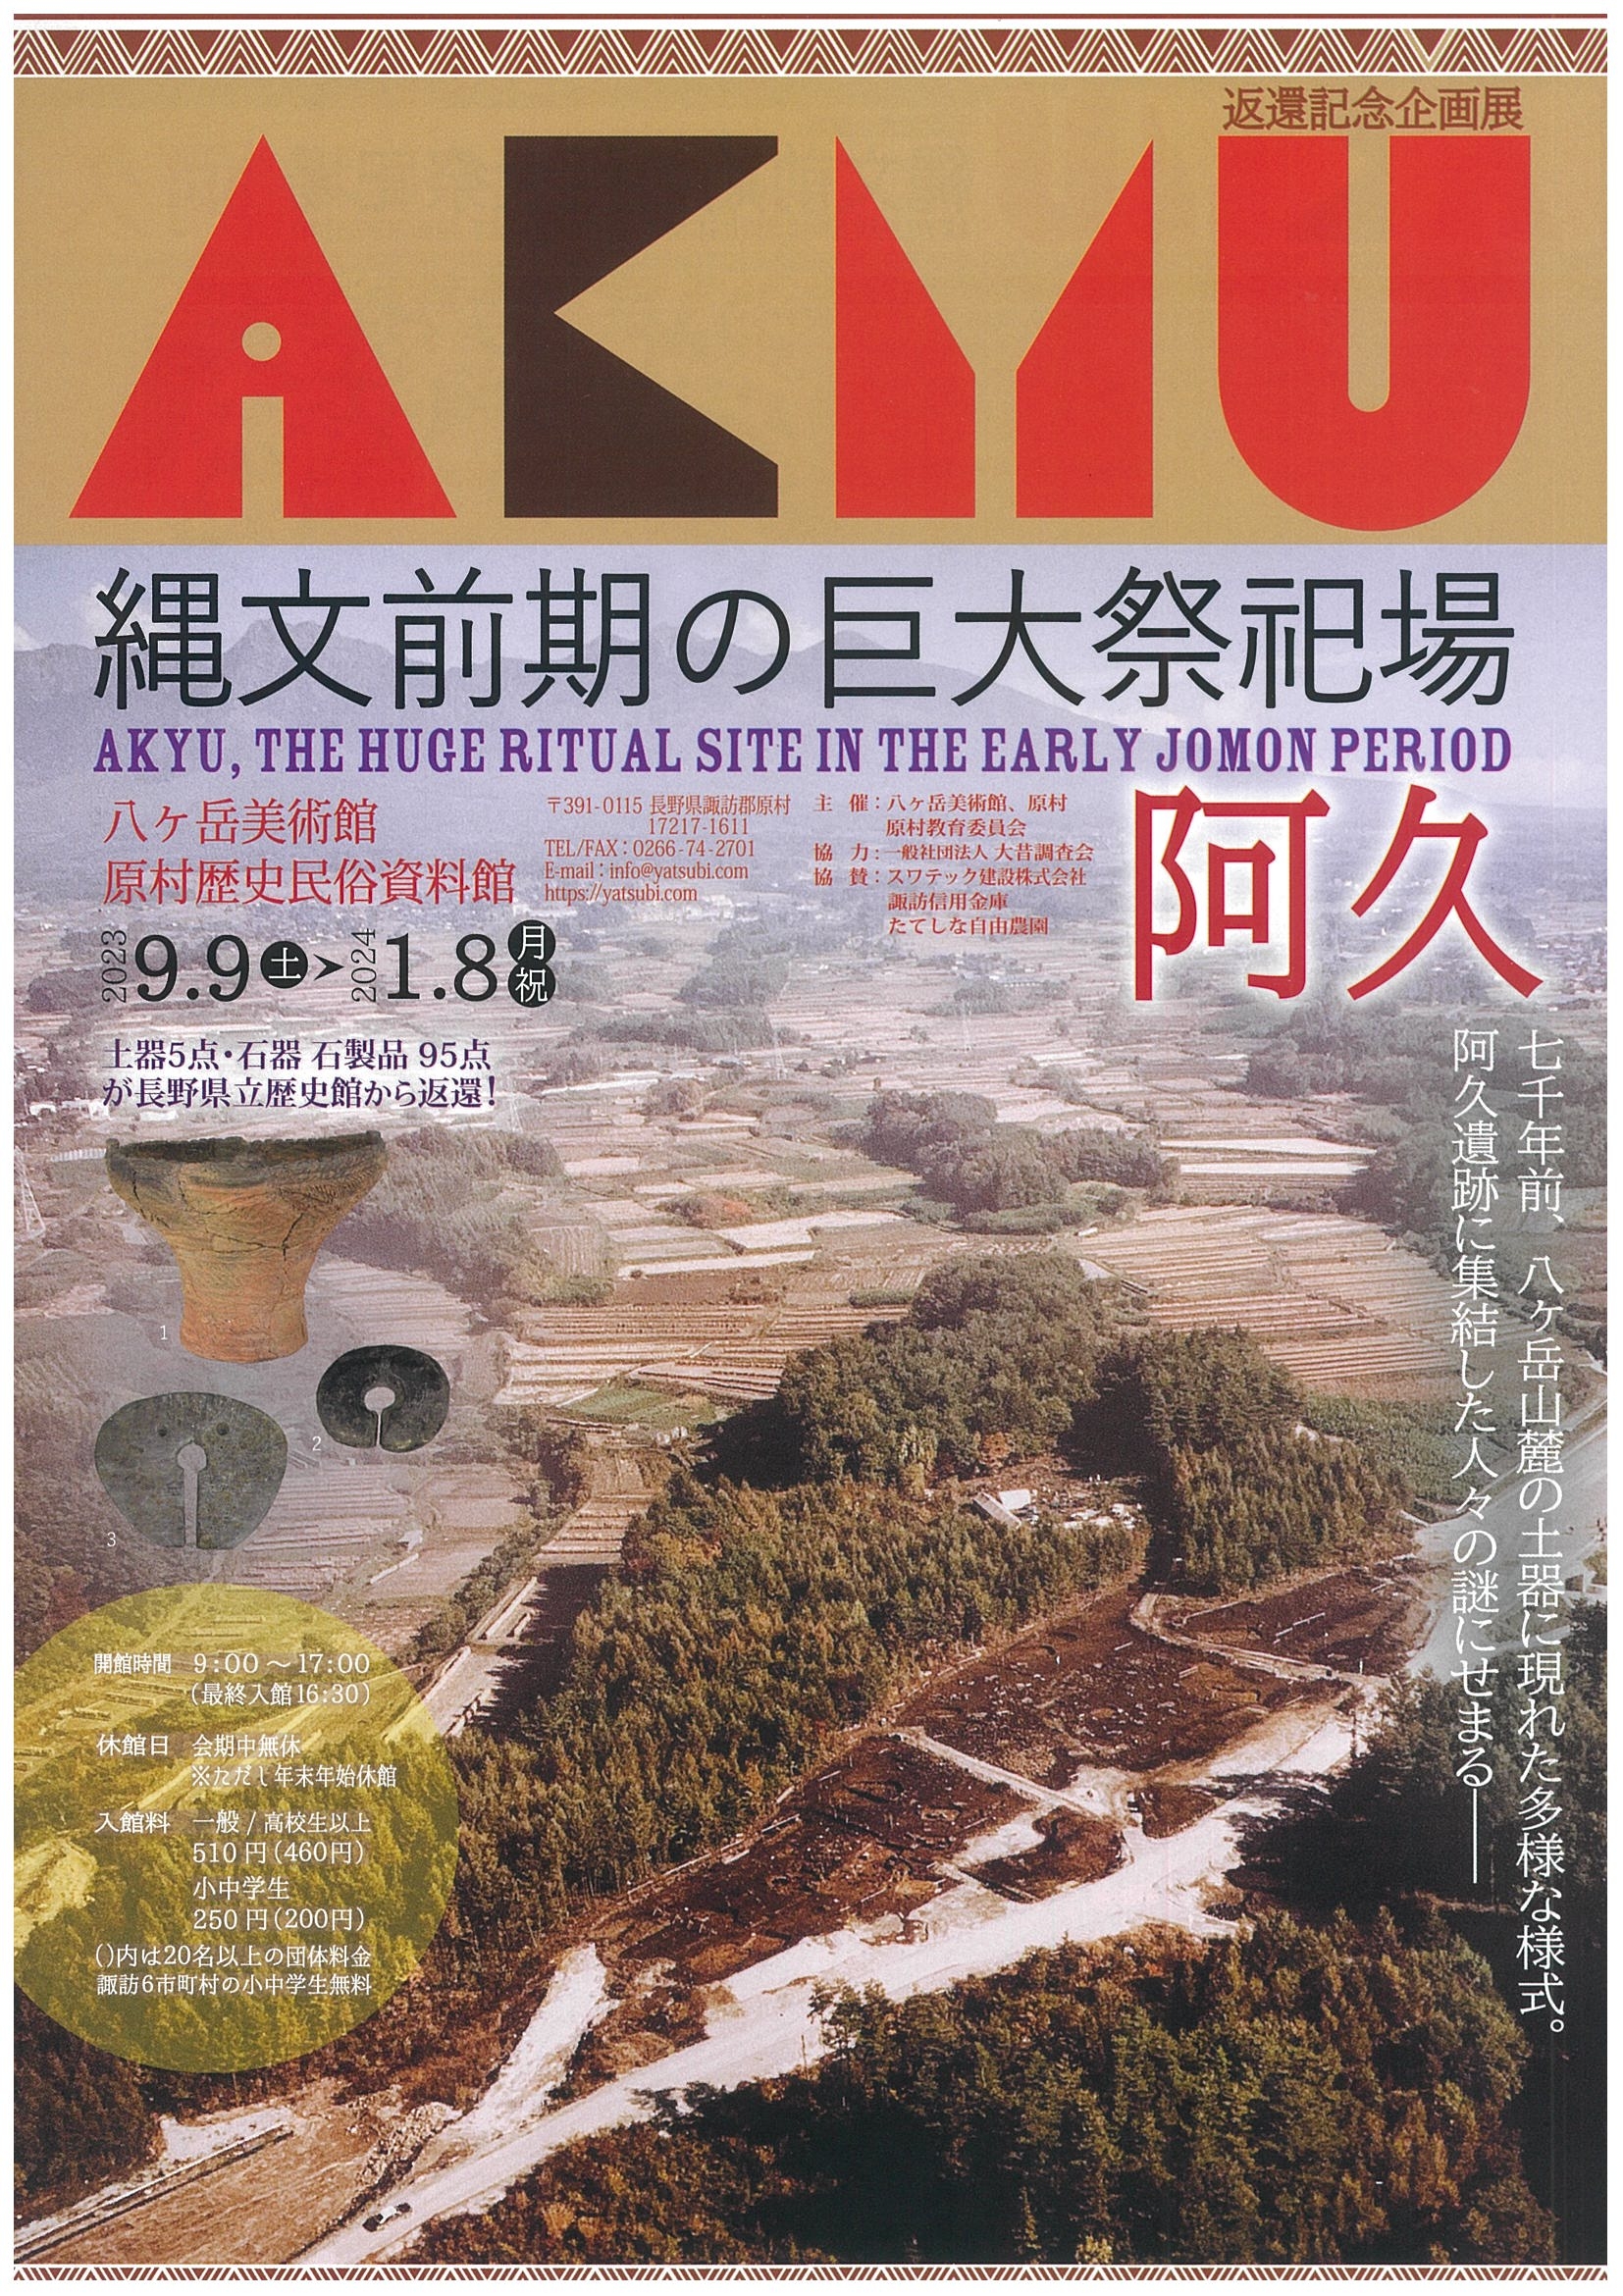 http://www.alpico.co.jp/shikinomori/news/images/20231004112005-0001.jpg